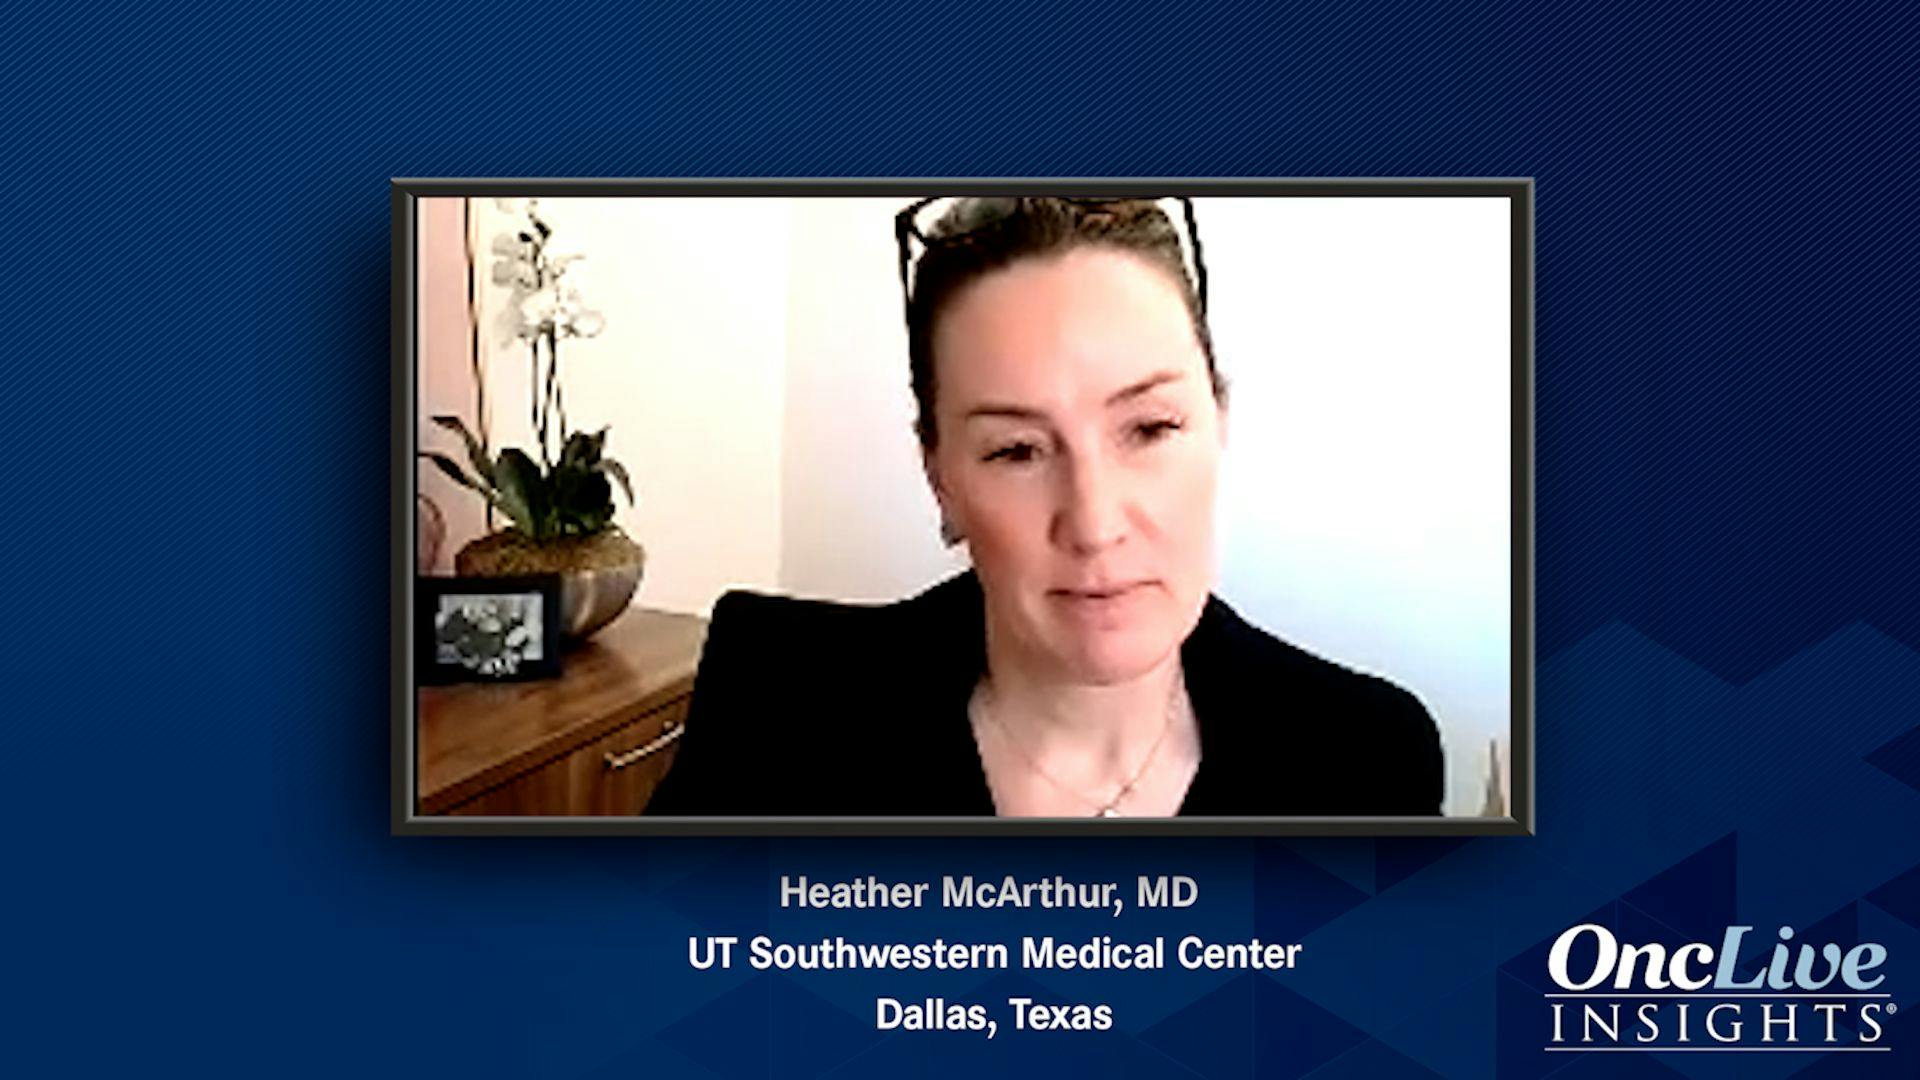 Heather McArthur, MD, an expert on breast cancer